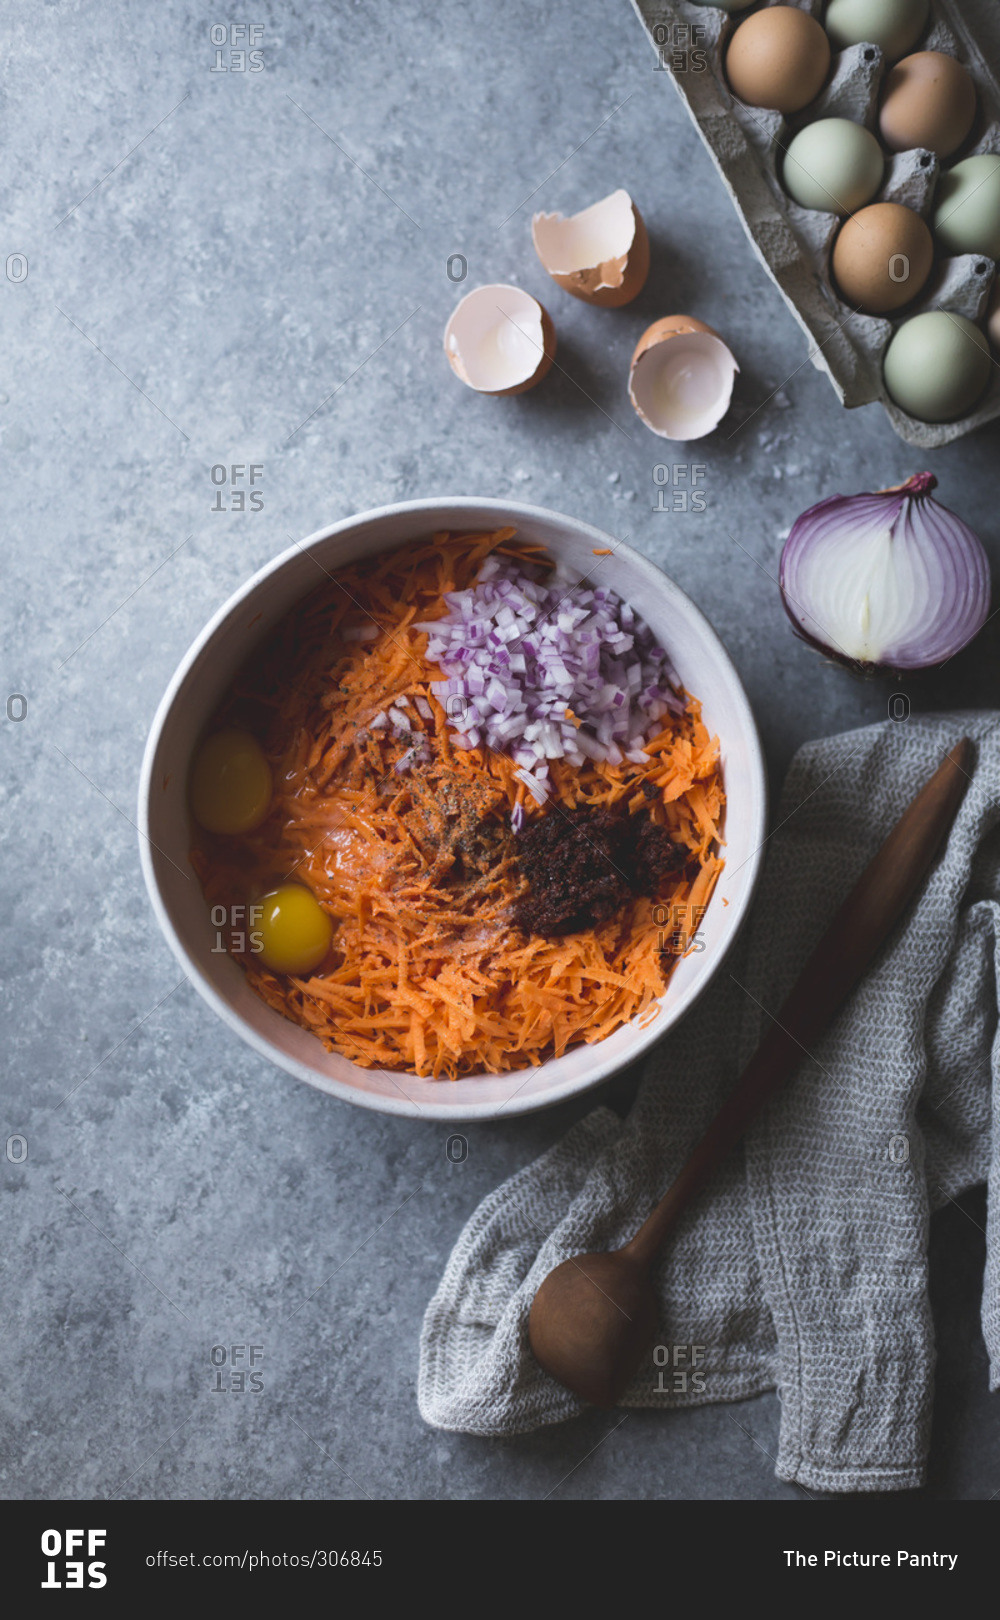 Ingredients for harissa sweet potato latkes, gluten-free in a bowl